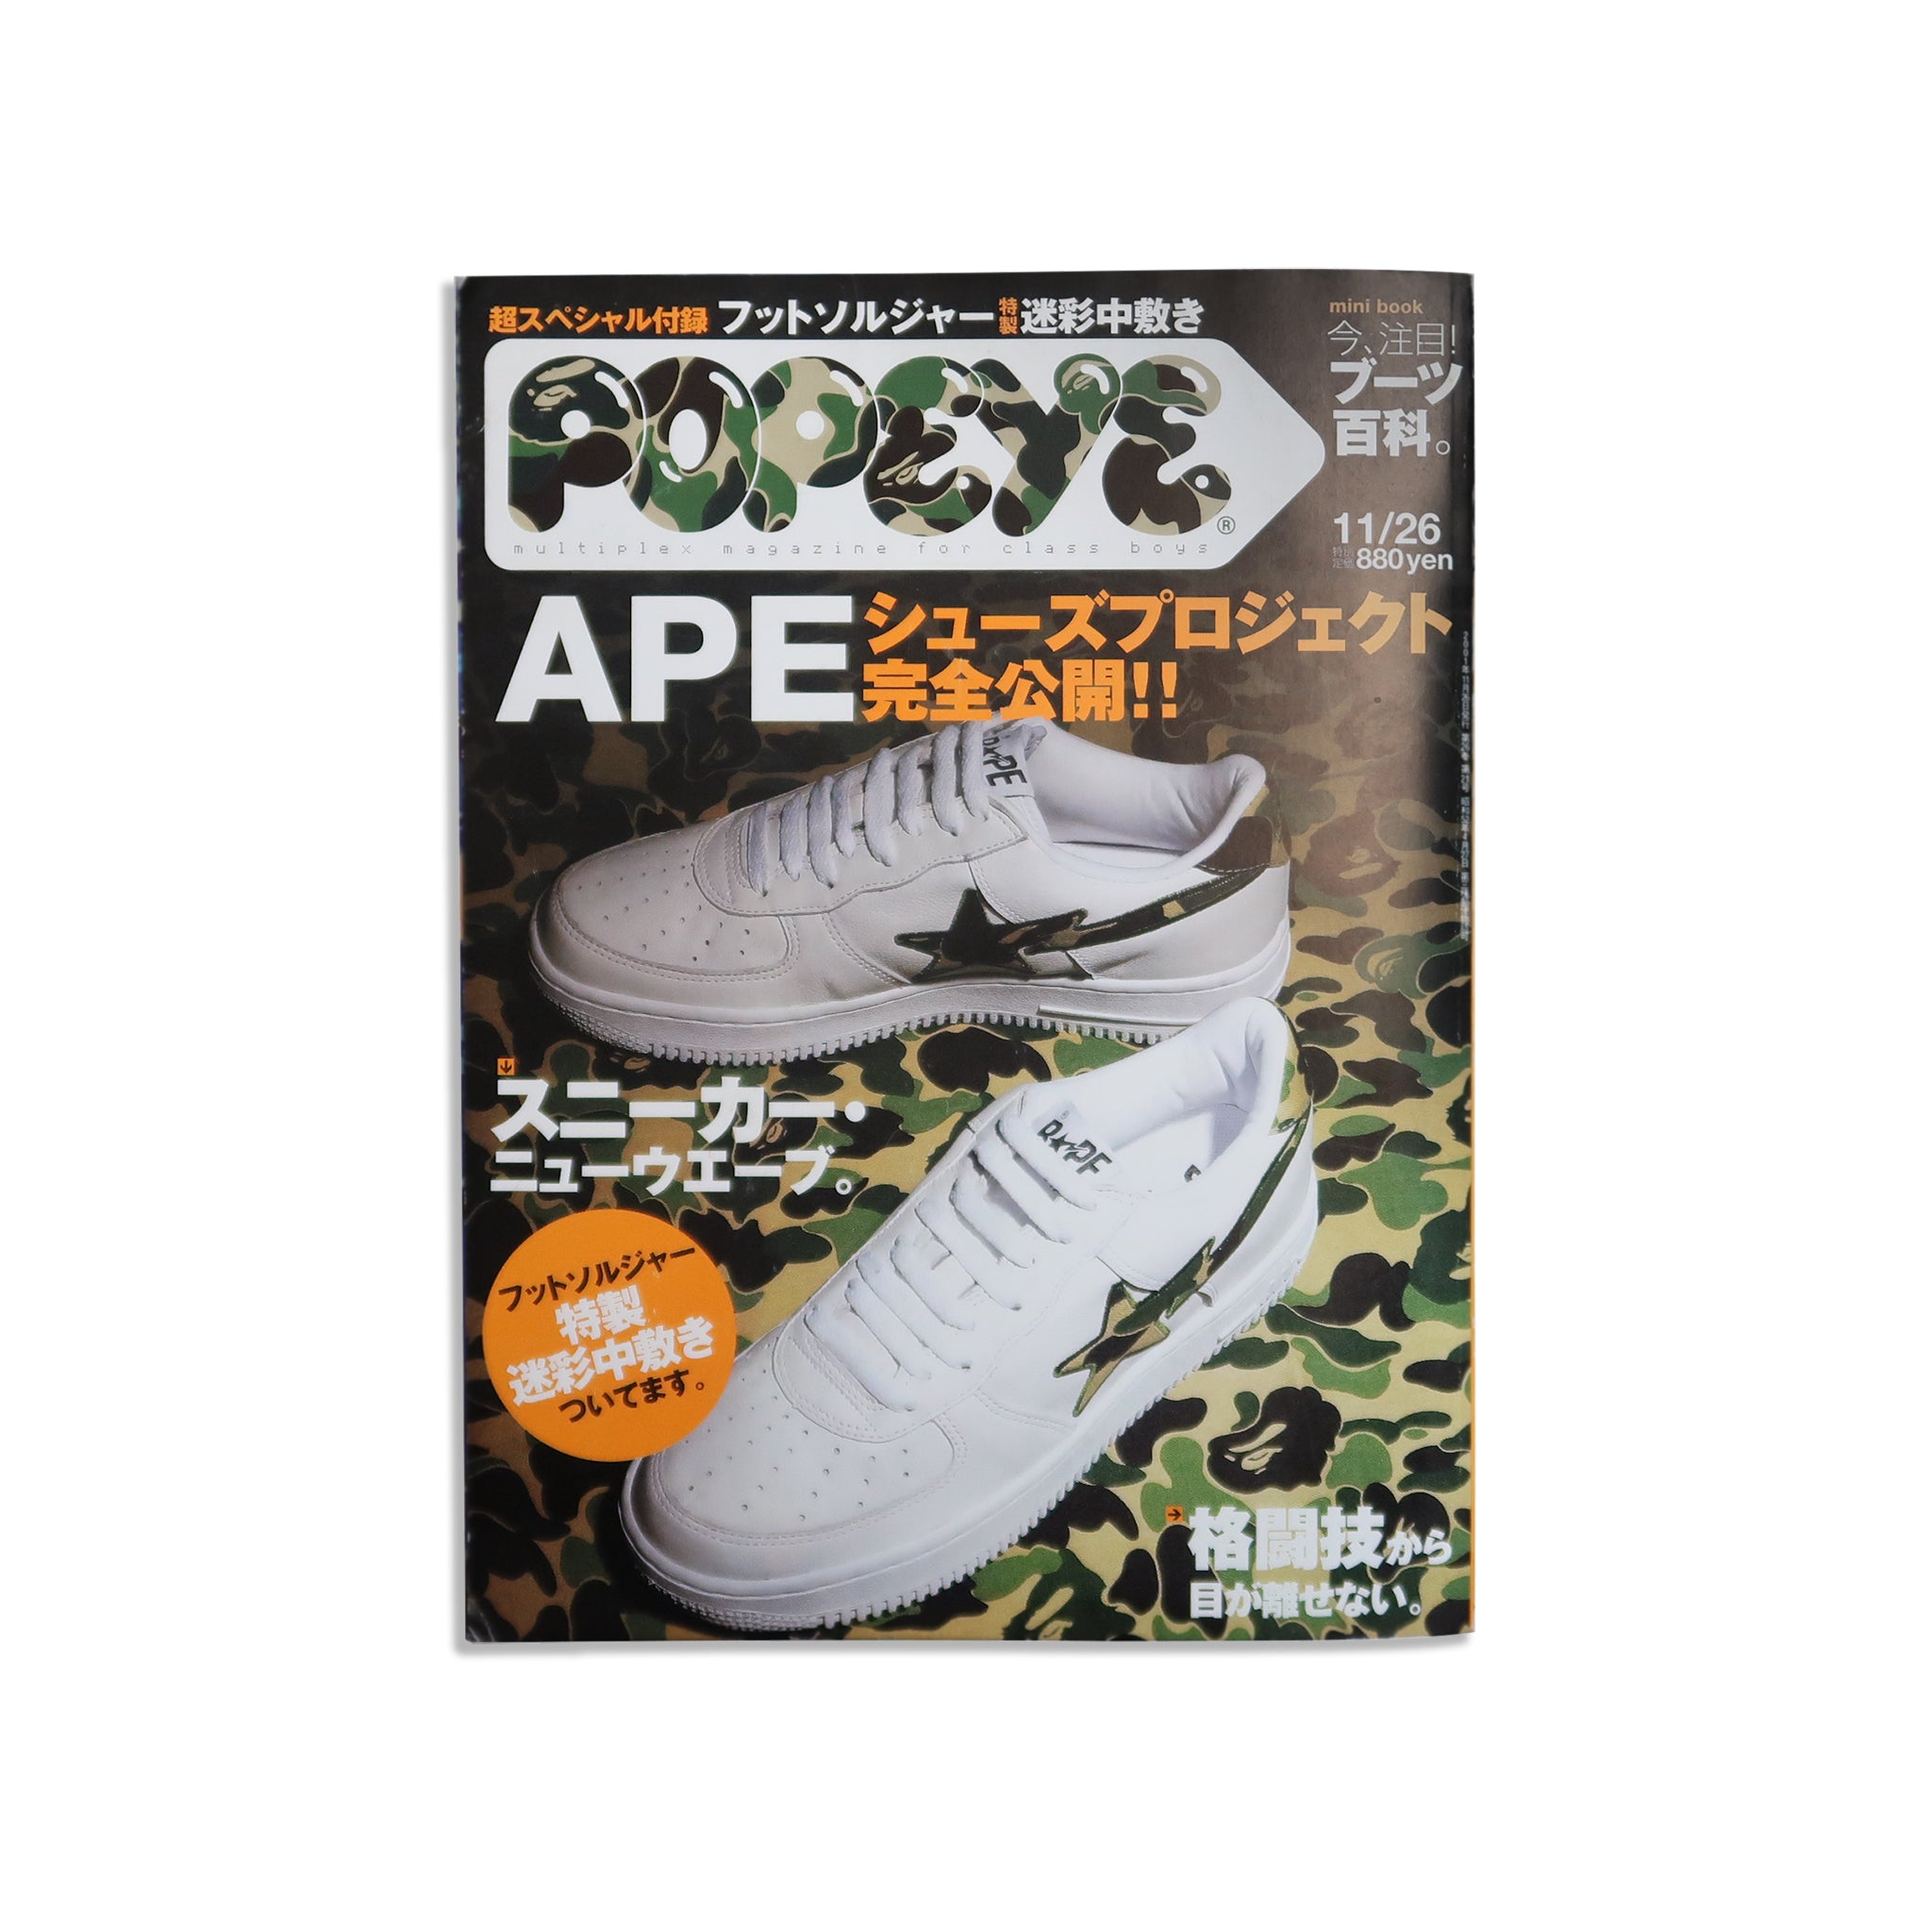 Popeye - Issue 622 11/26 2001 (incl. A Bathing Ape Bape Sta